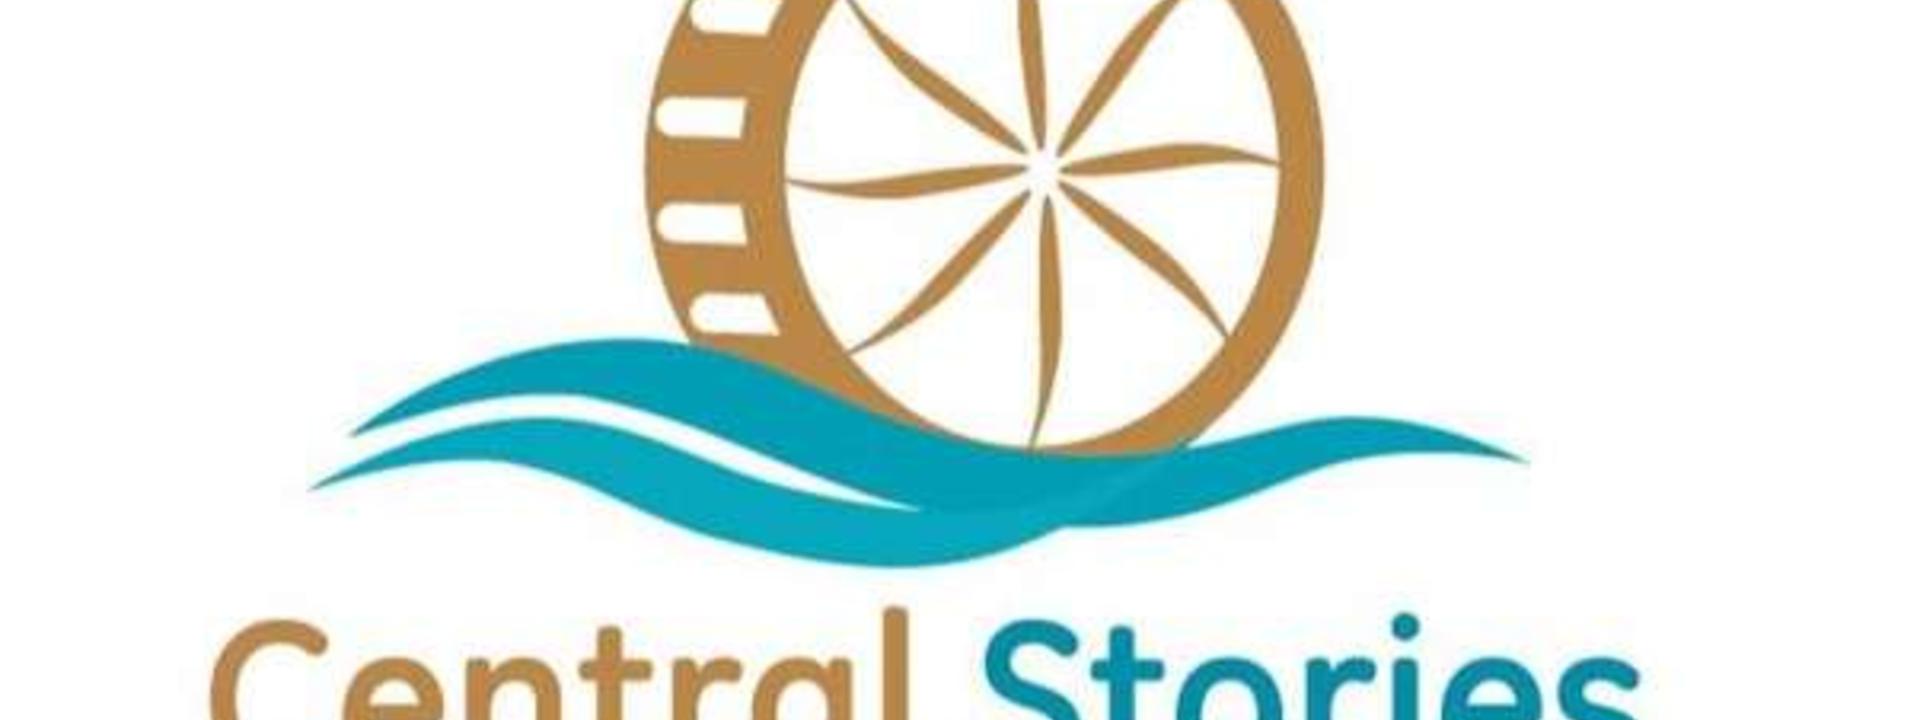 central-stories-logo_resampled7300.jpg